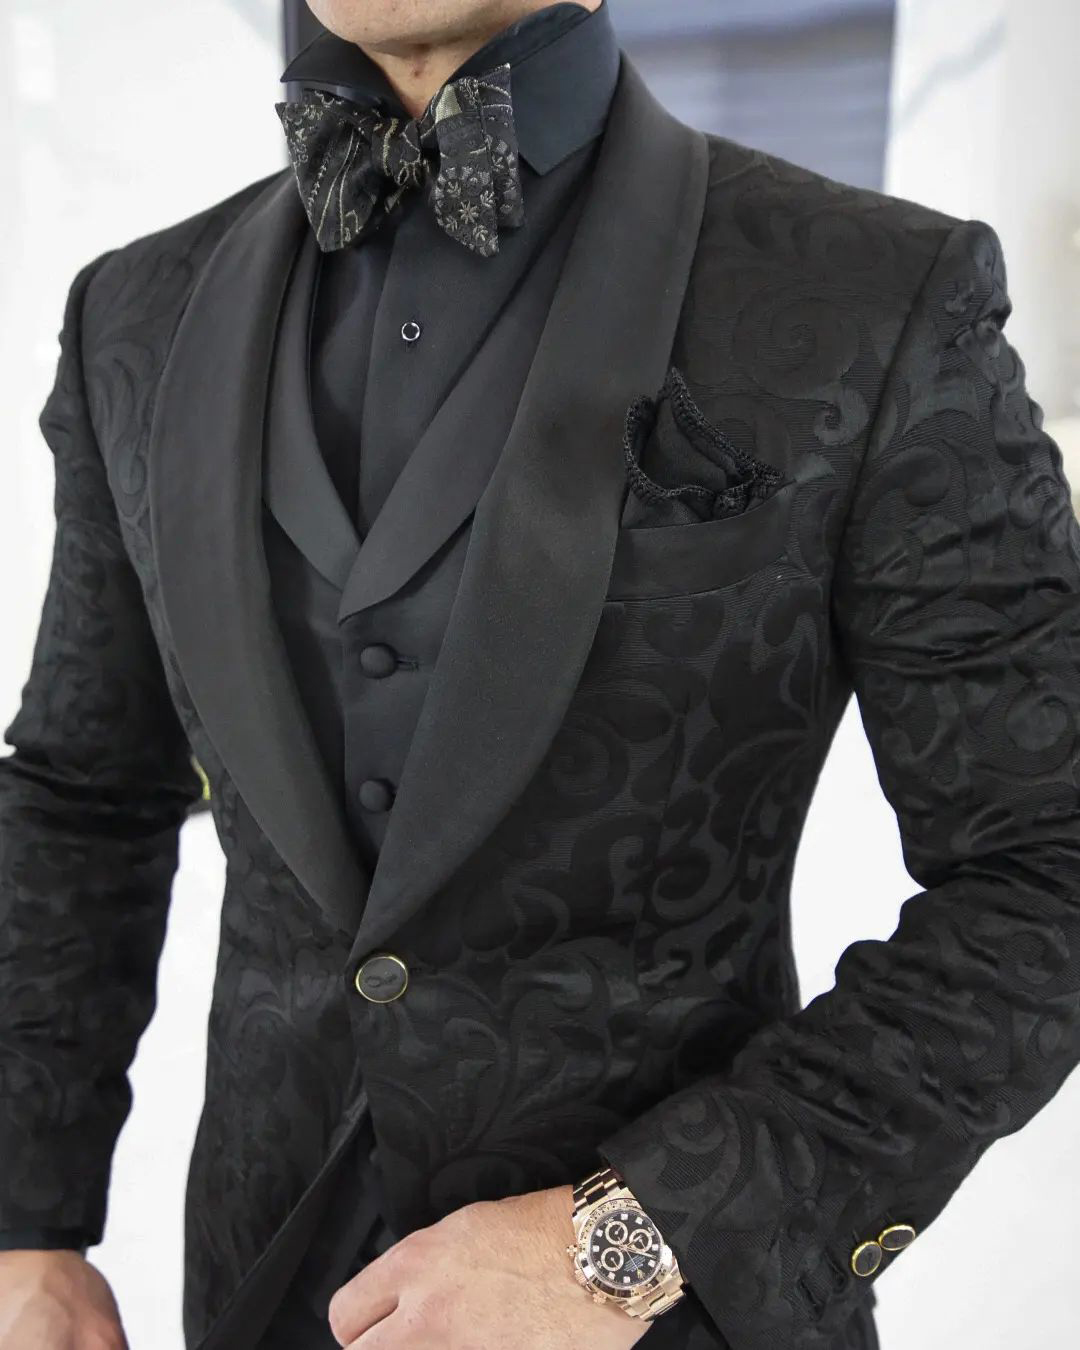 black wedding suit jacket velvet with bow tie sebastien